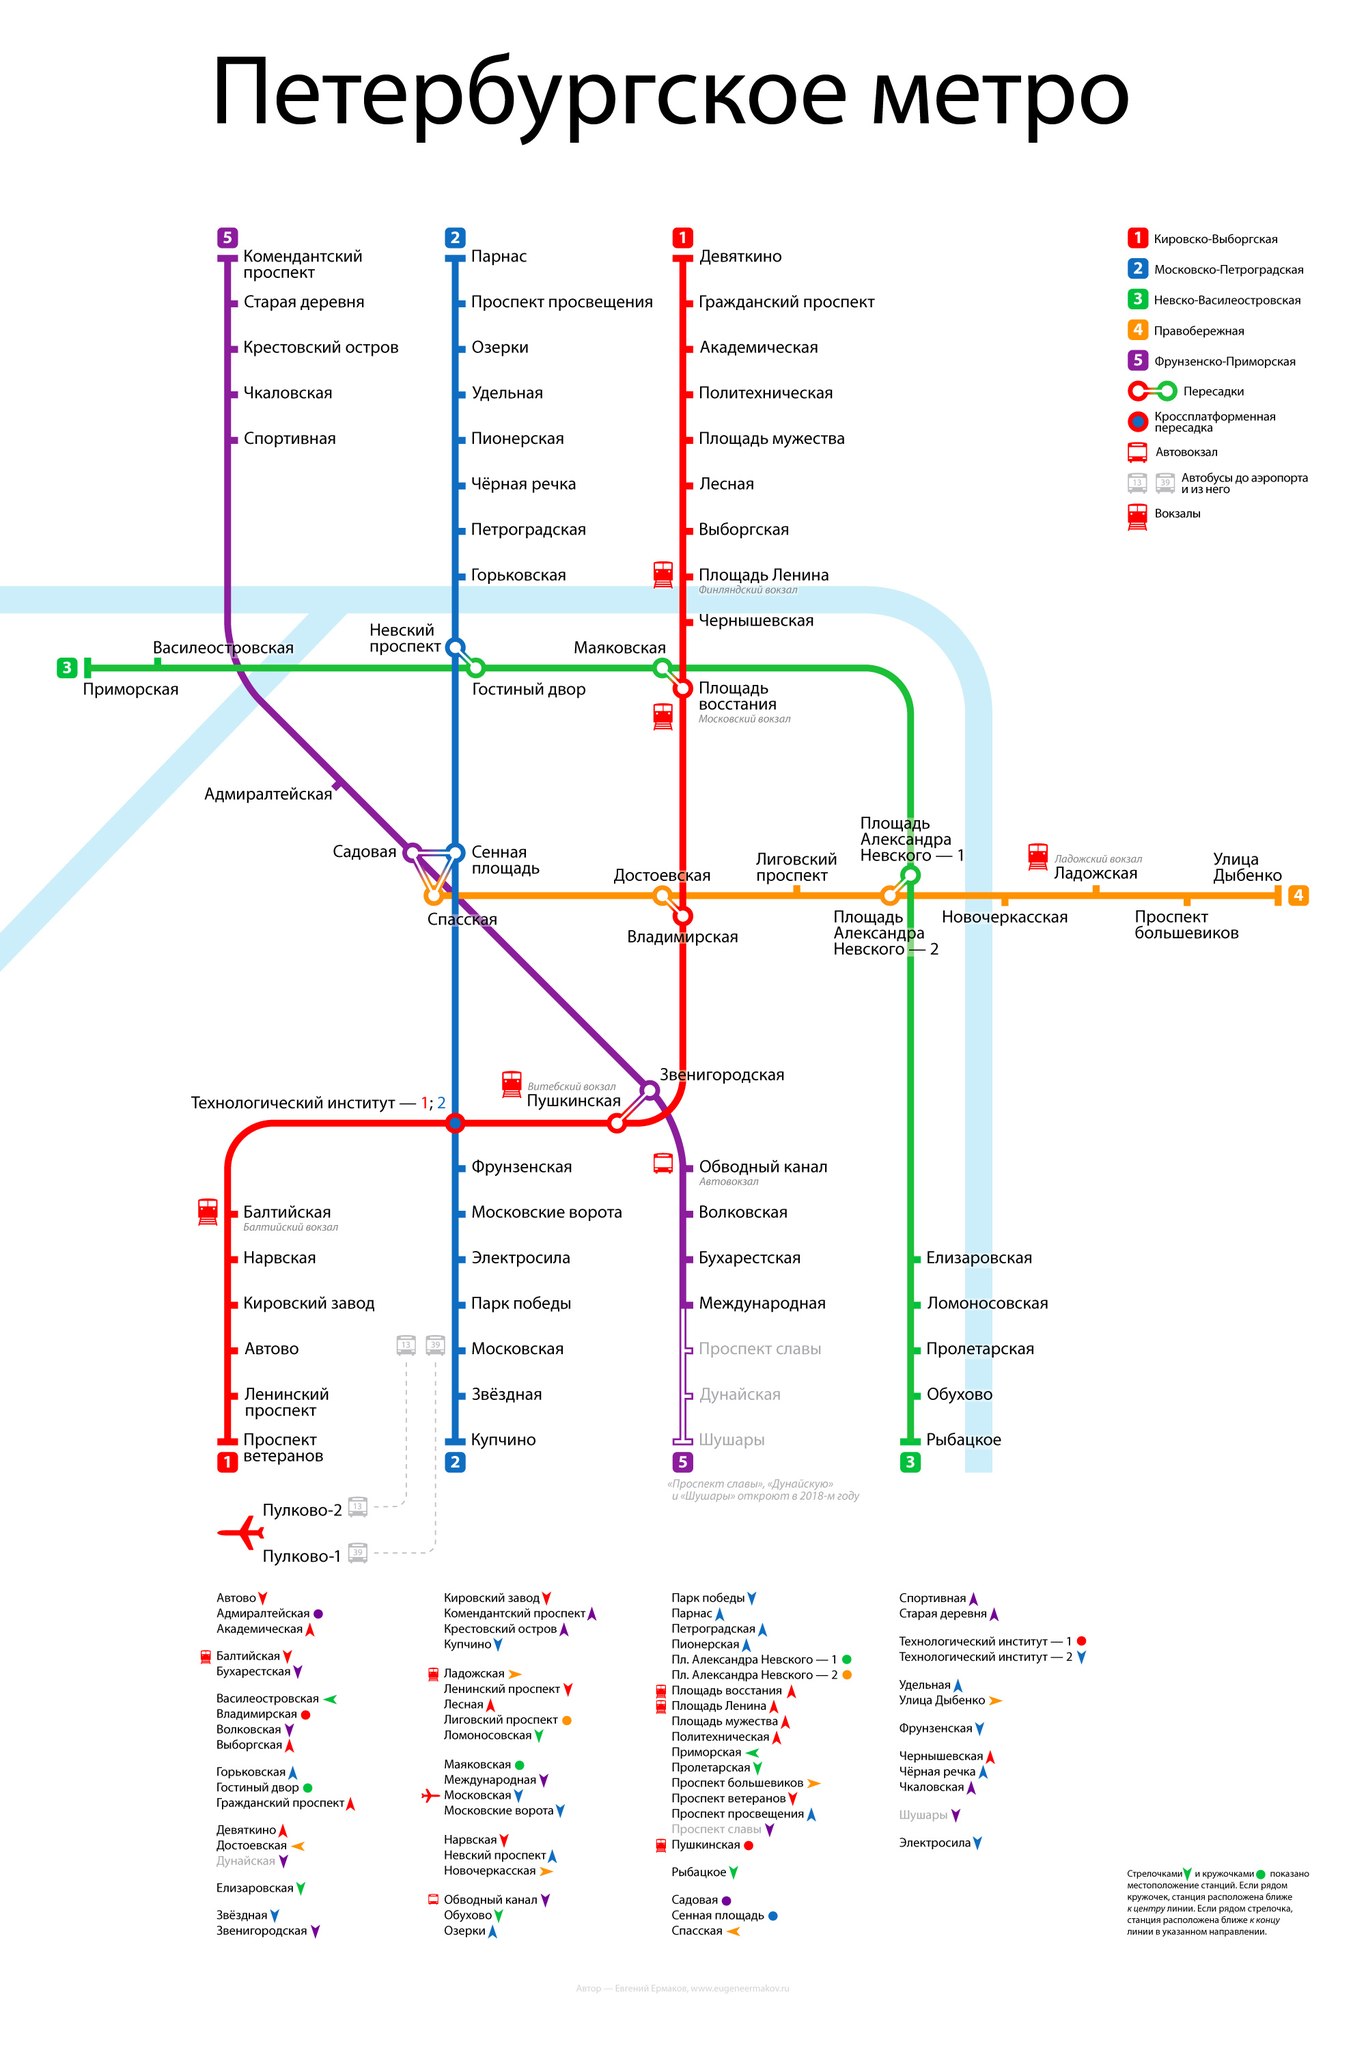 Станции метро спб схема 2024. Карта метрополитена 2022 метрополитена Санкт-Петербурга. Метрополитен Питера схема 2021. Схема метрополитена СПБ 2021. Схема метрополитена СПБ 2022.